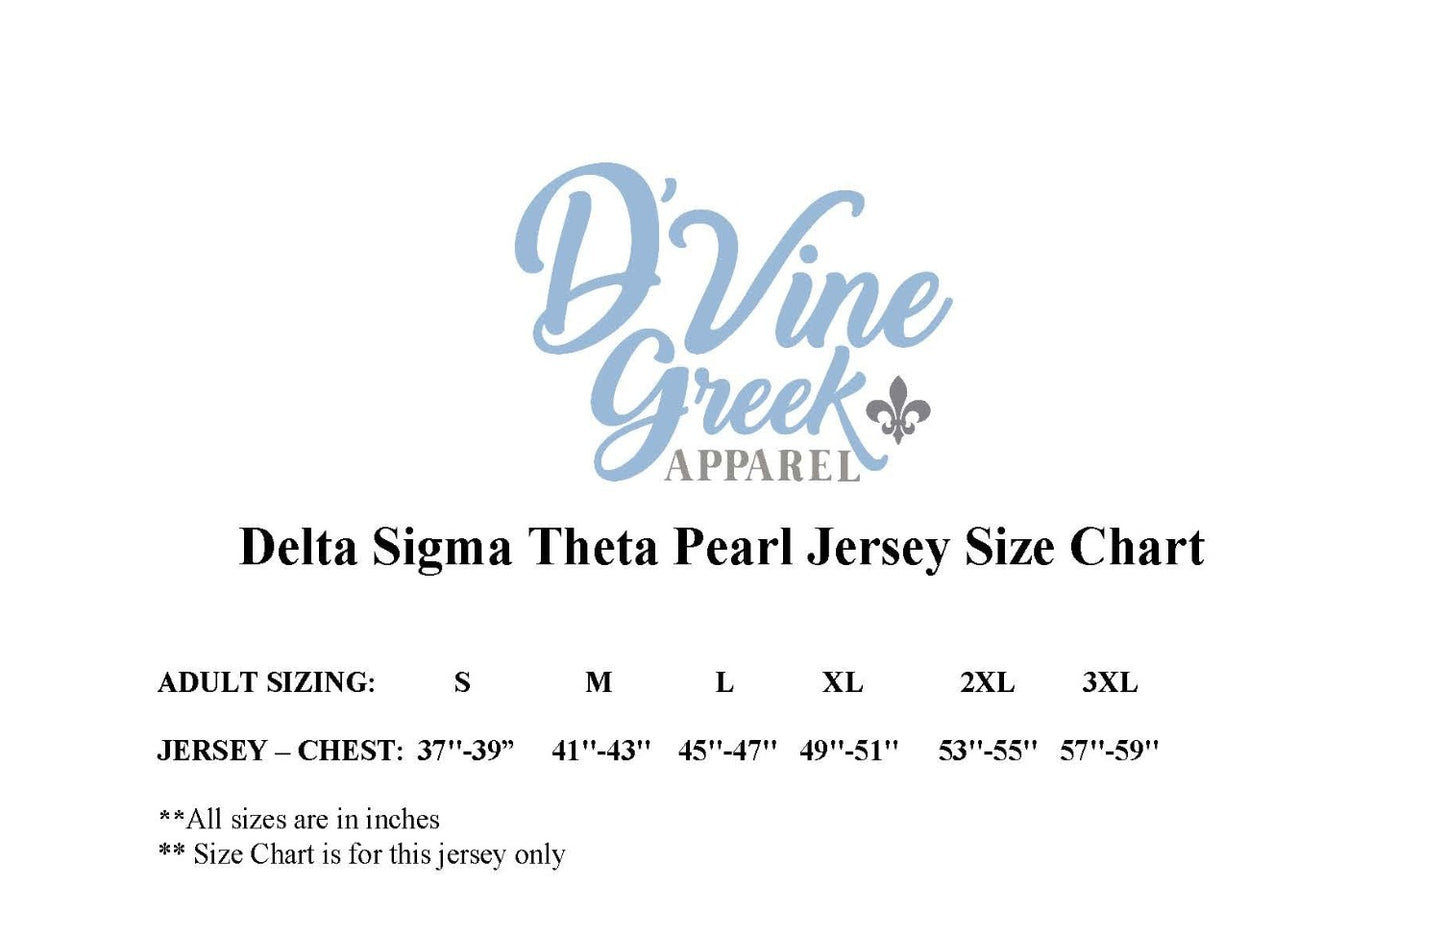 Delta Sigma Theta Pearl Jersey